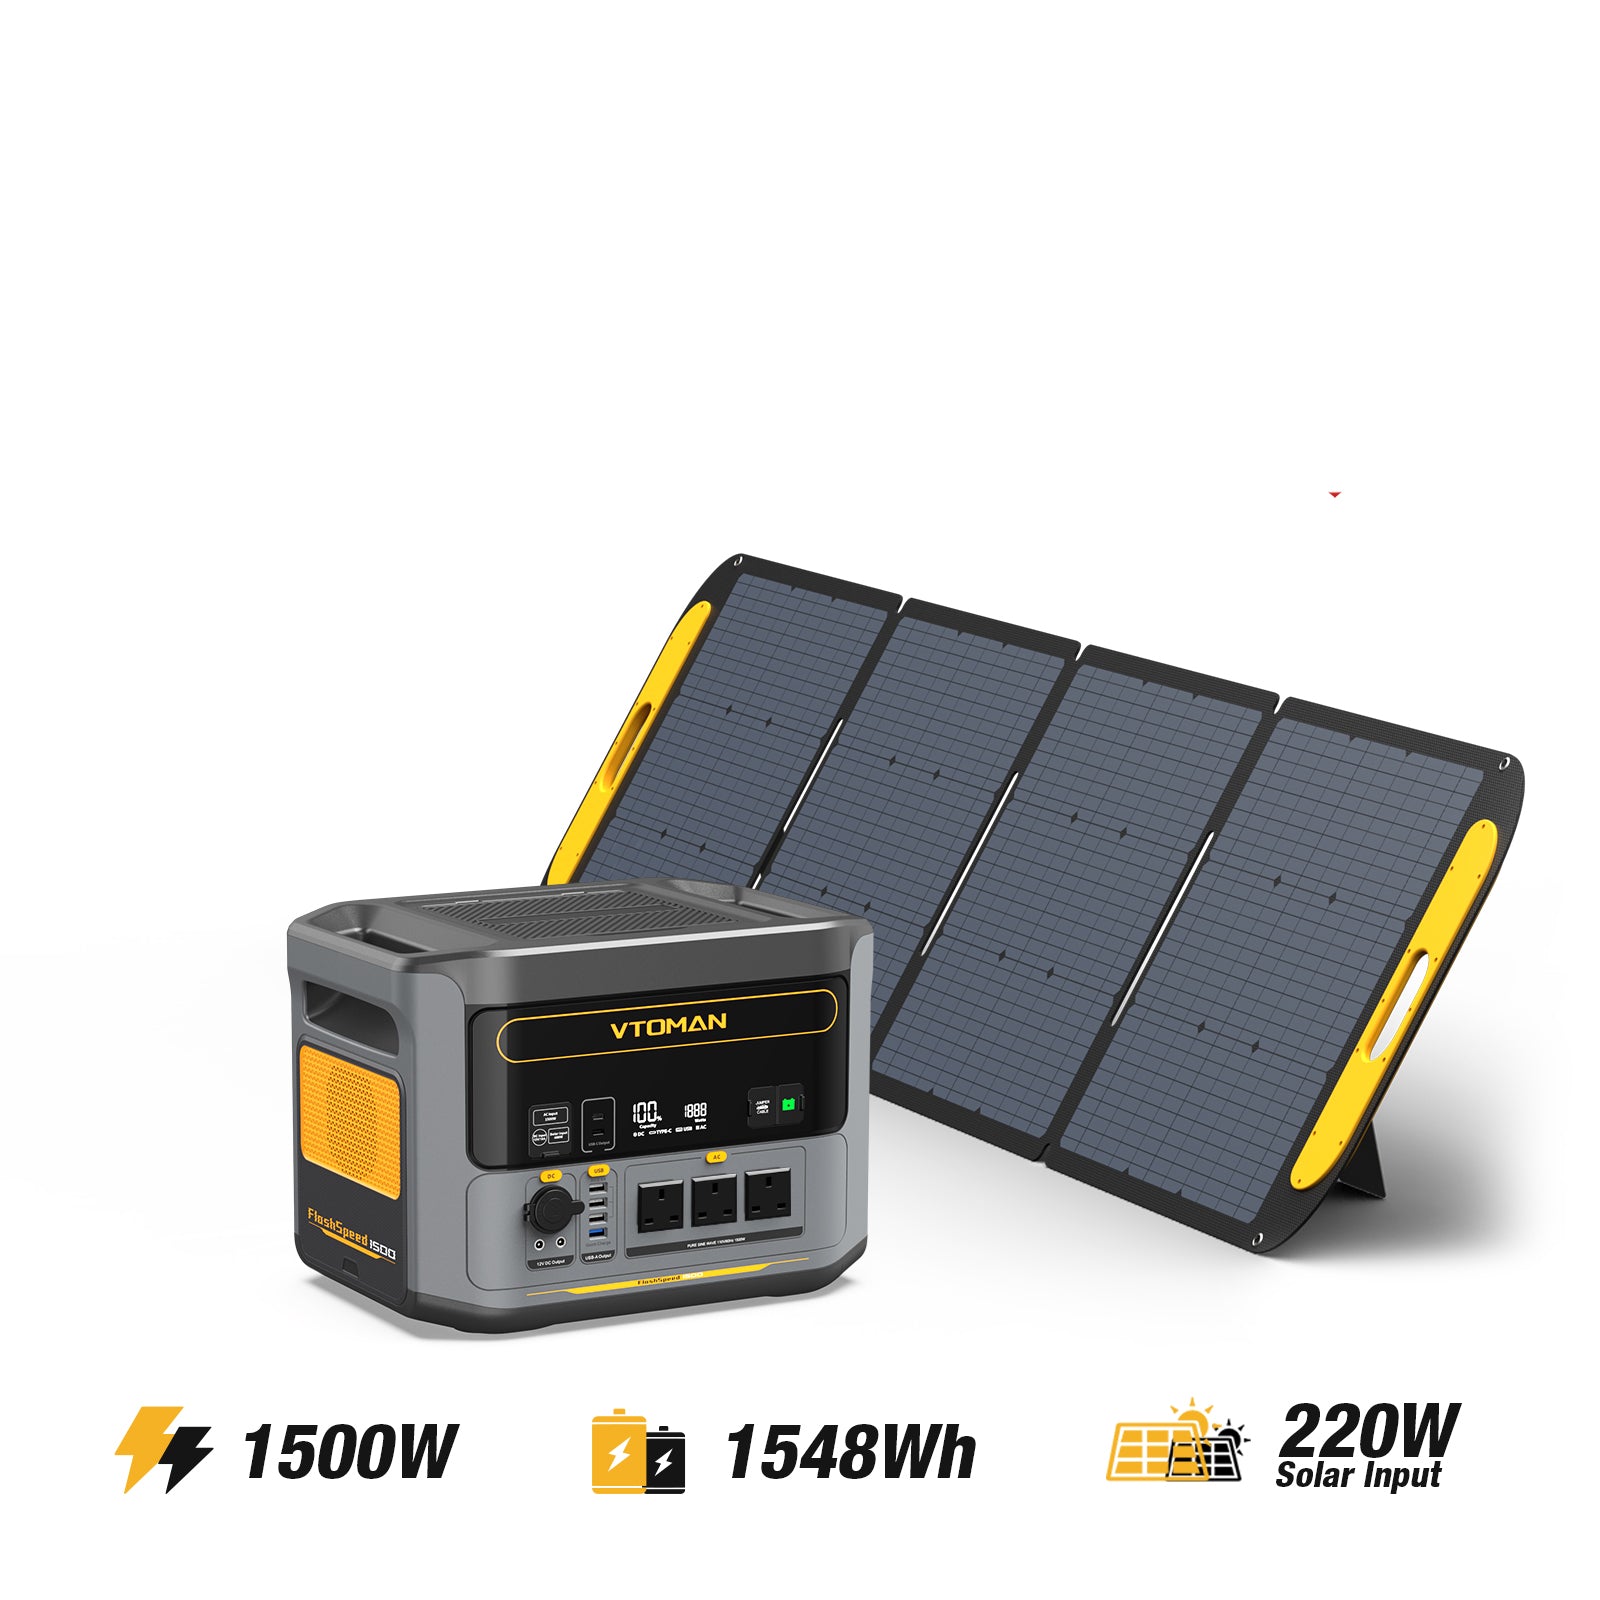 FlashSpeed 1500W/1548Wh 220W Pro Solar Generator